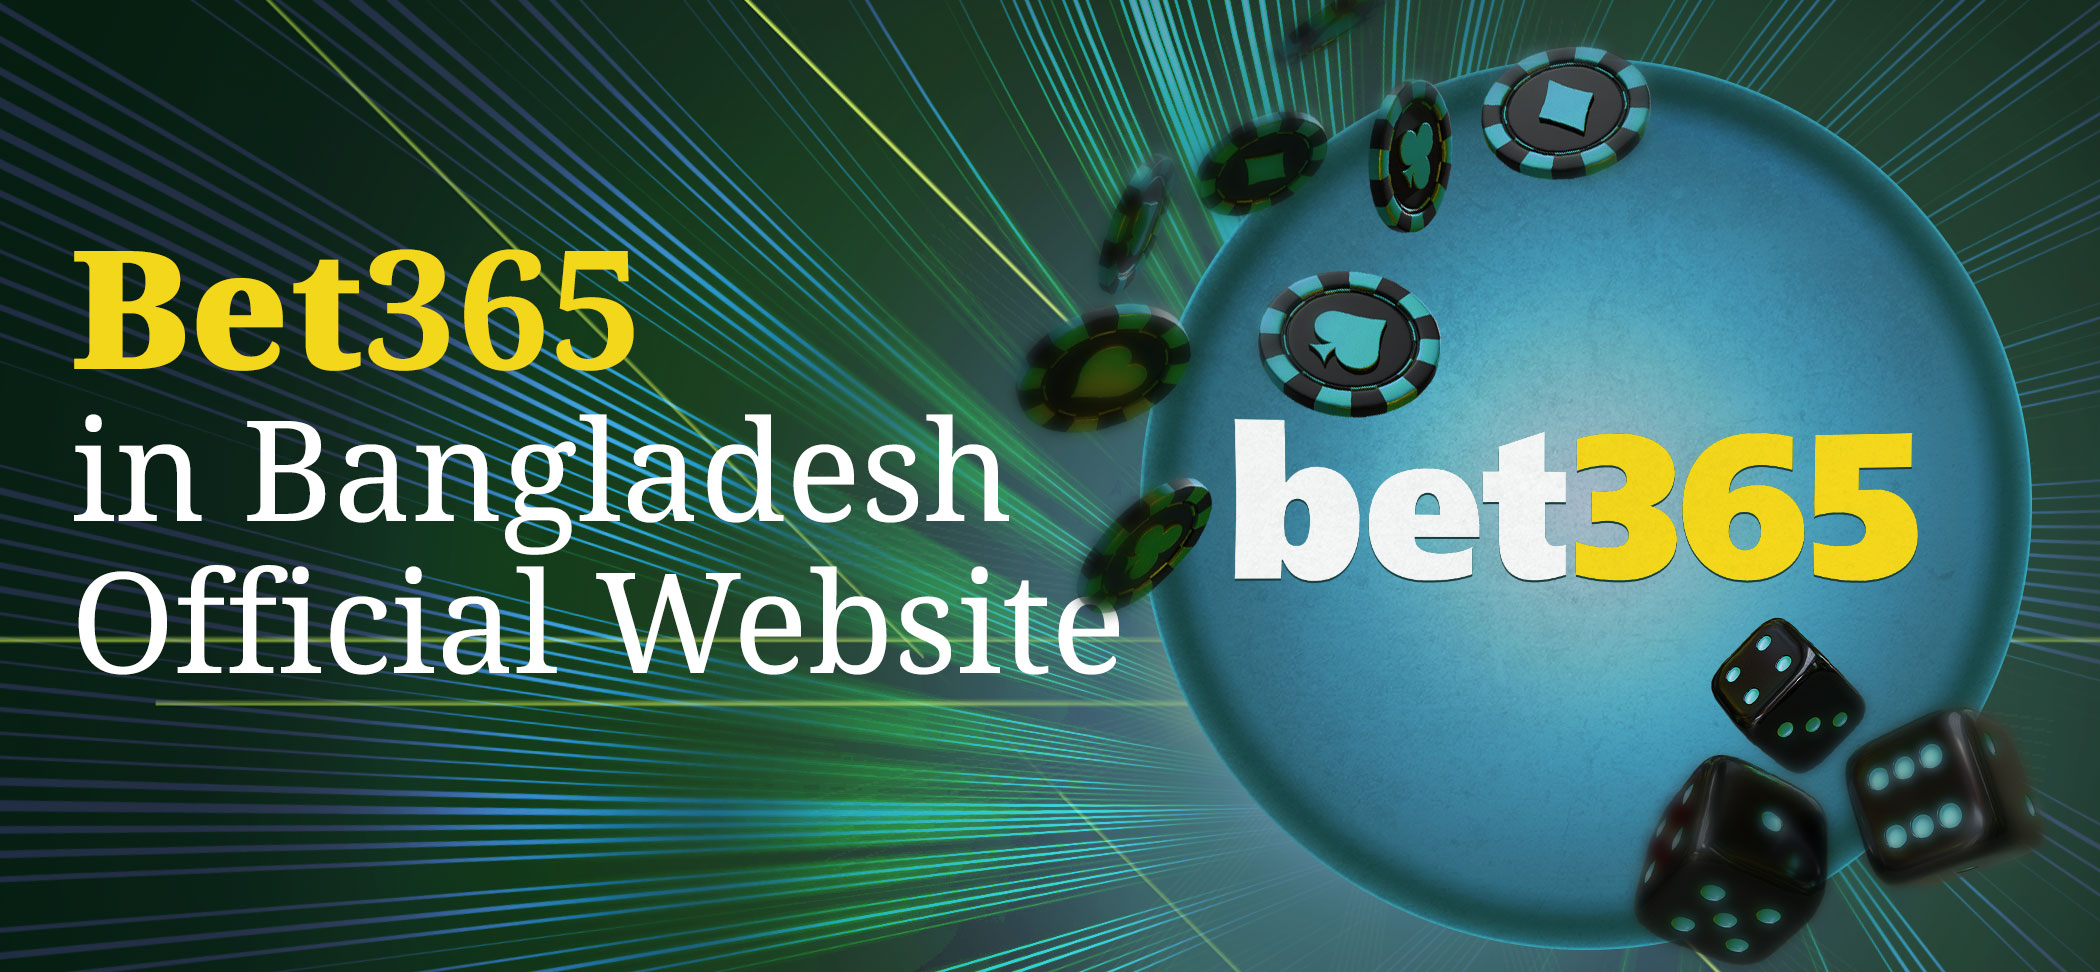 The pivotal information regarding the bet365 betting & casino platform in Bangladesh.